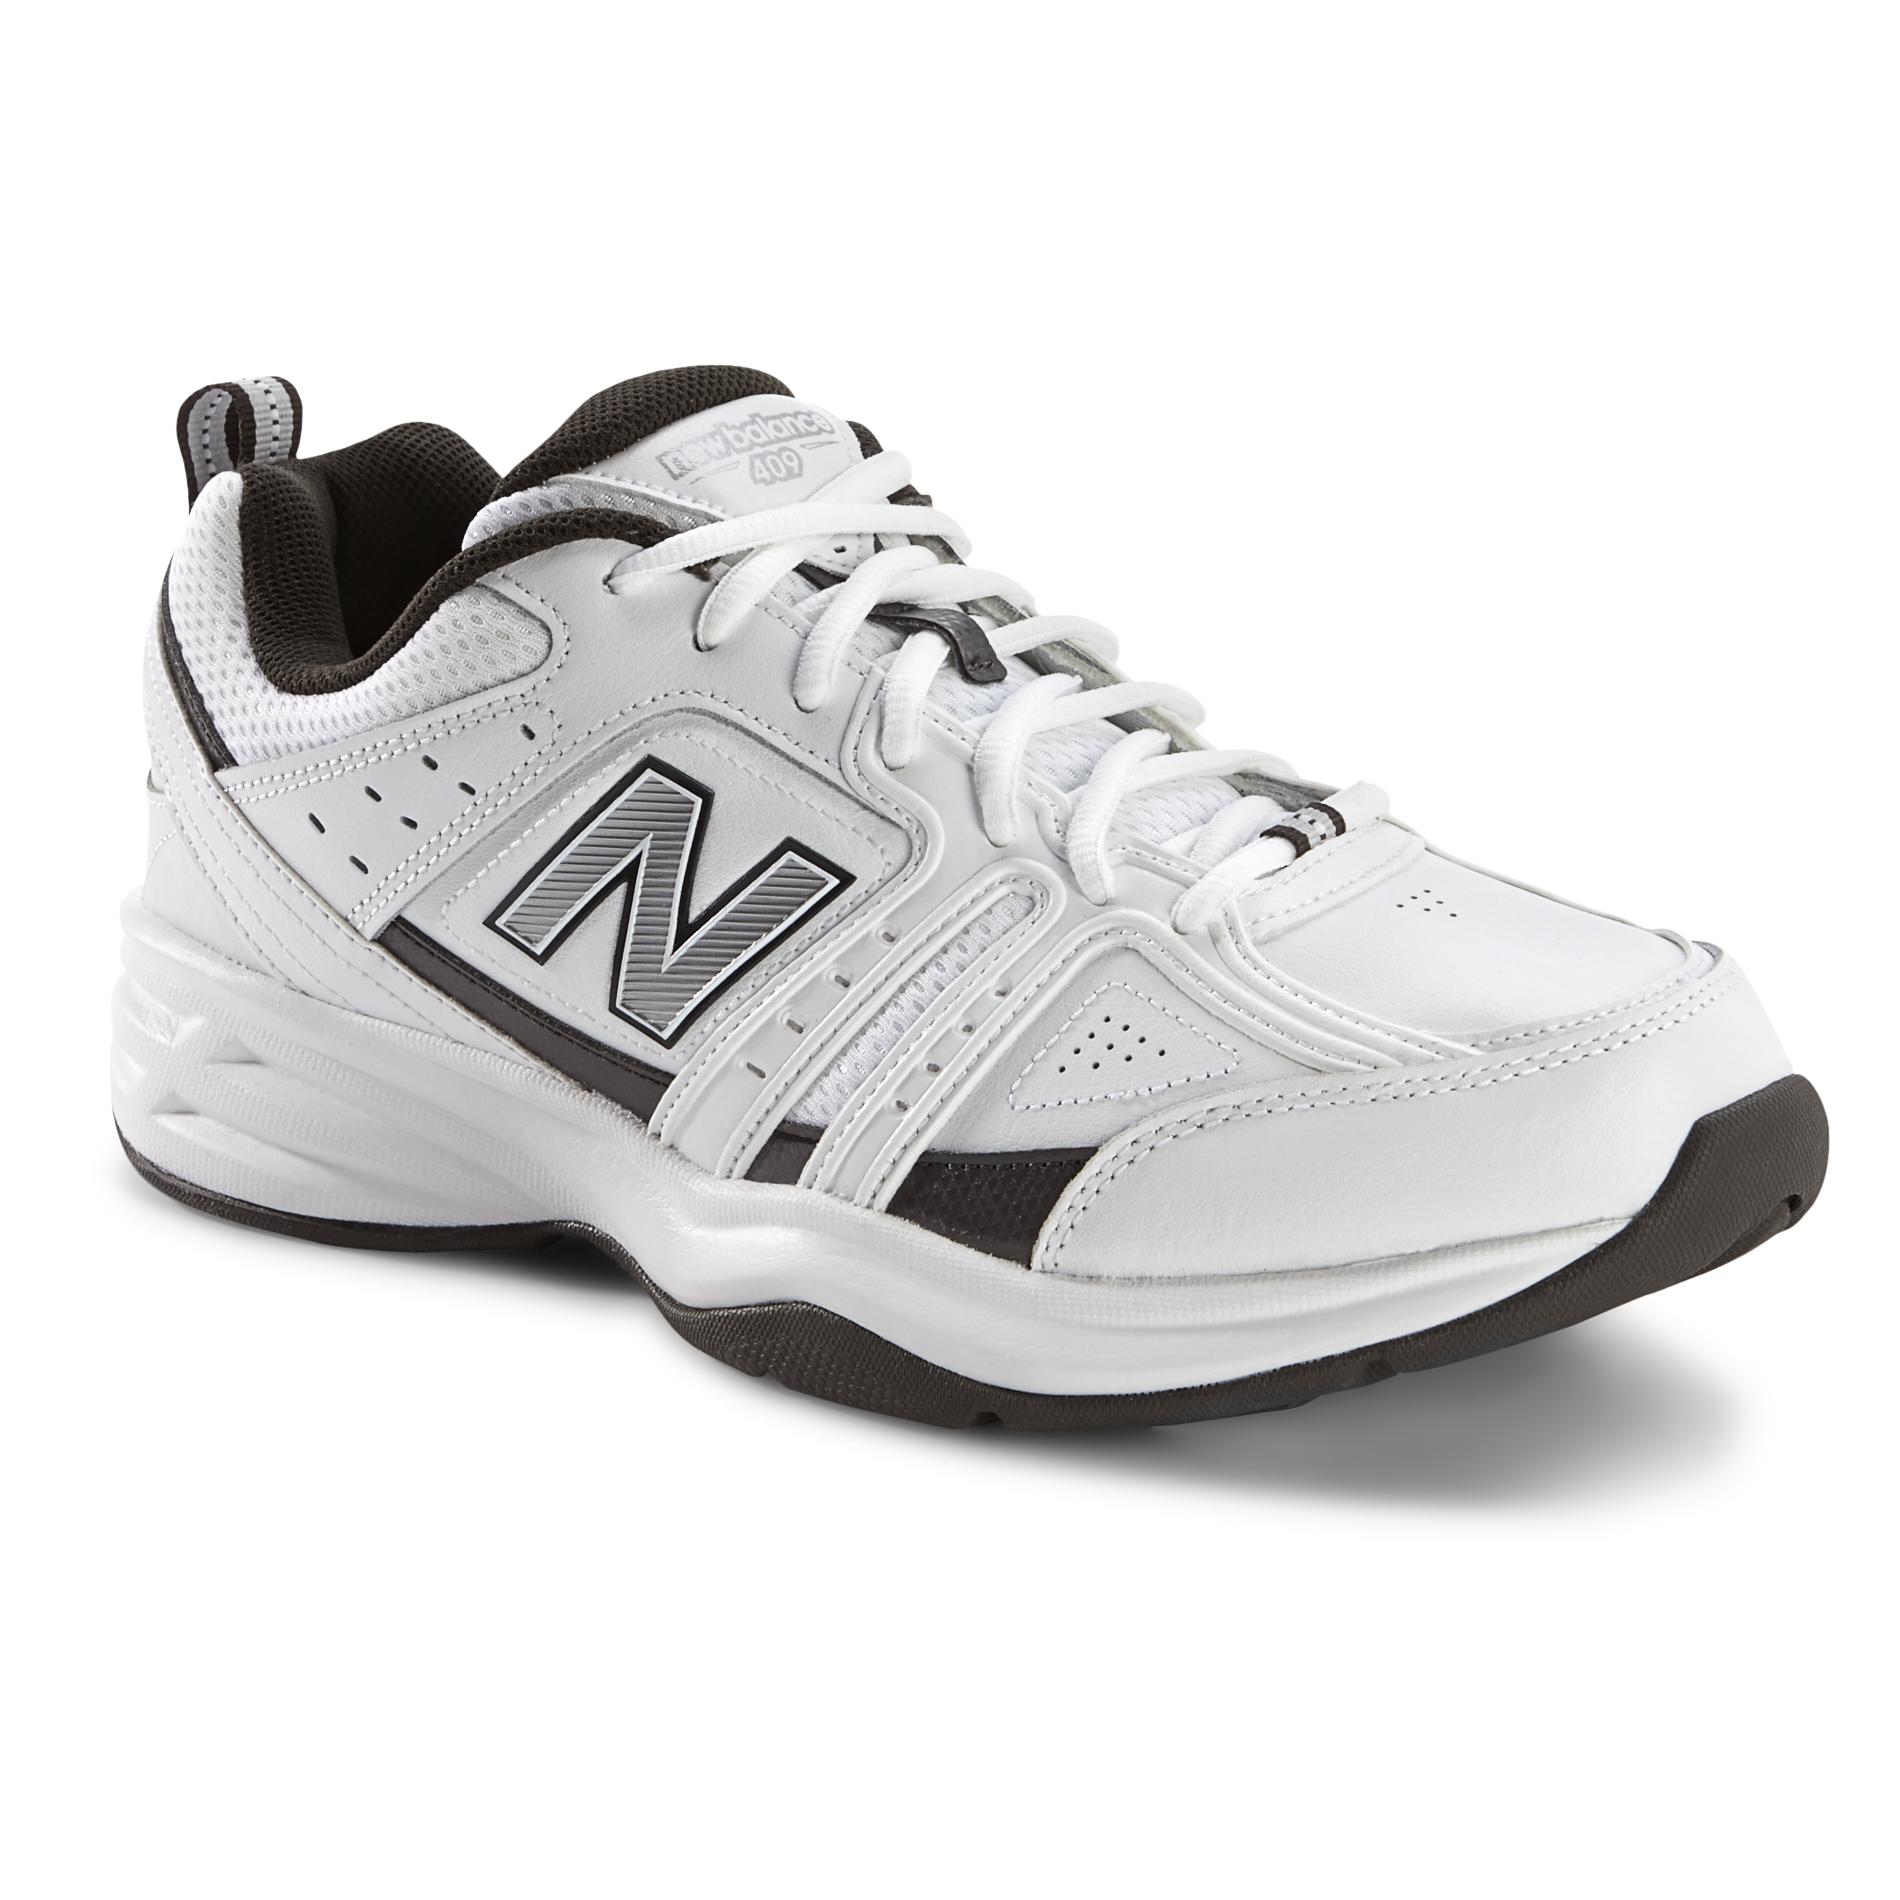 New Balance Men's 409V2 Cross Training Athletic Shoe - White/Grey Wide ...